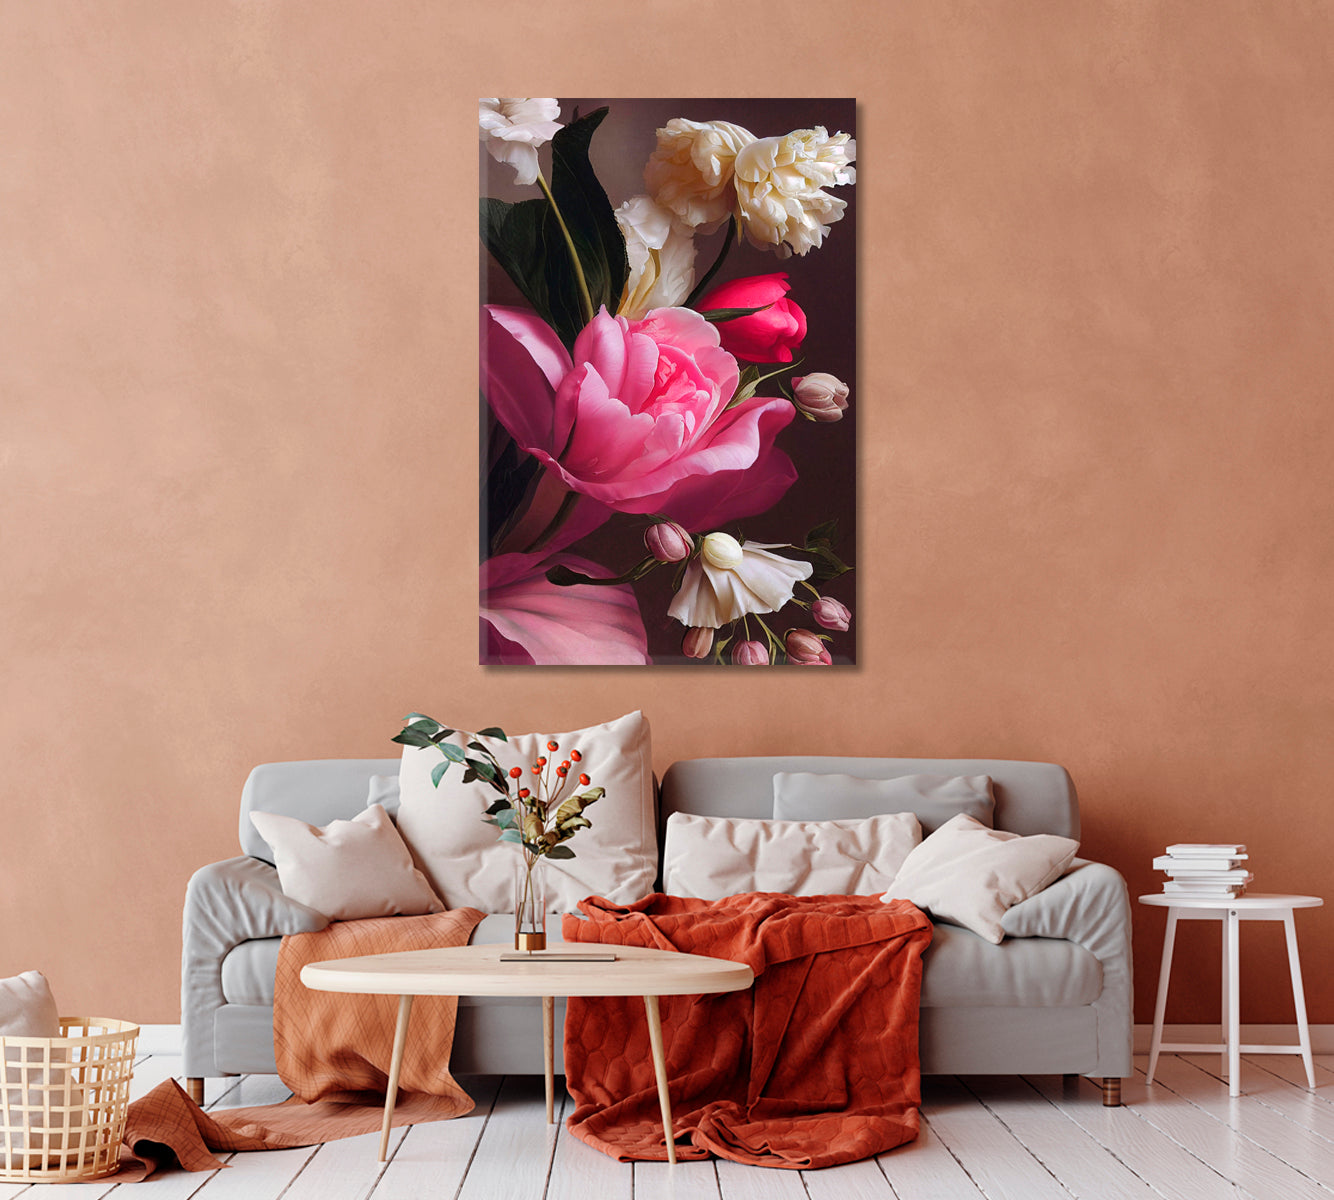 Elegant Roses Still Life Wall Art-Canvas Print-CetArt-1 panel-16x24 inches-CetArt